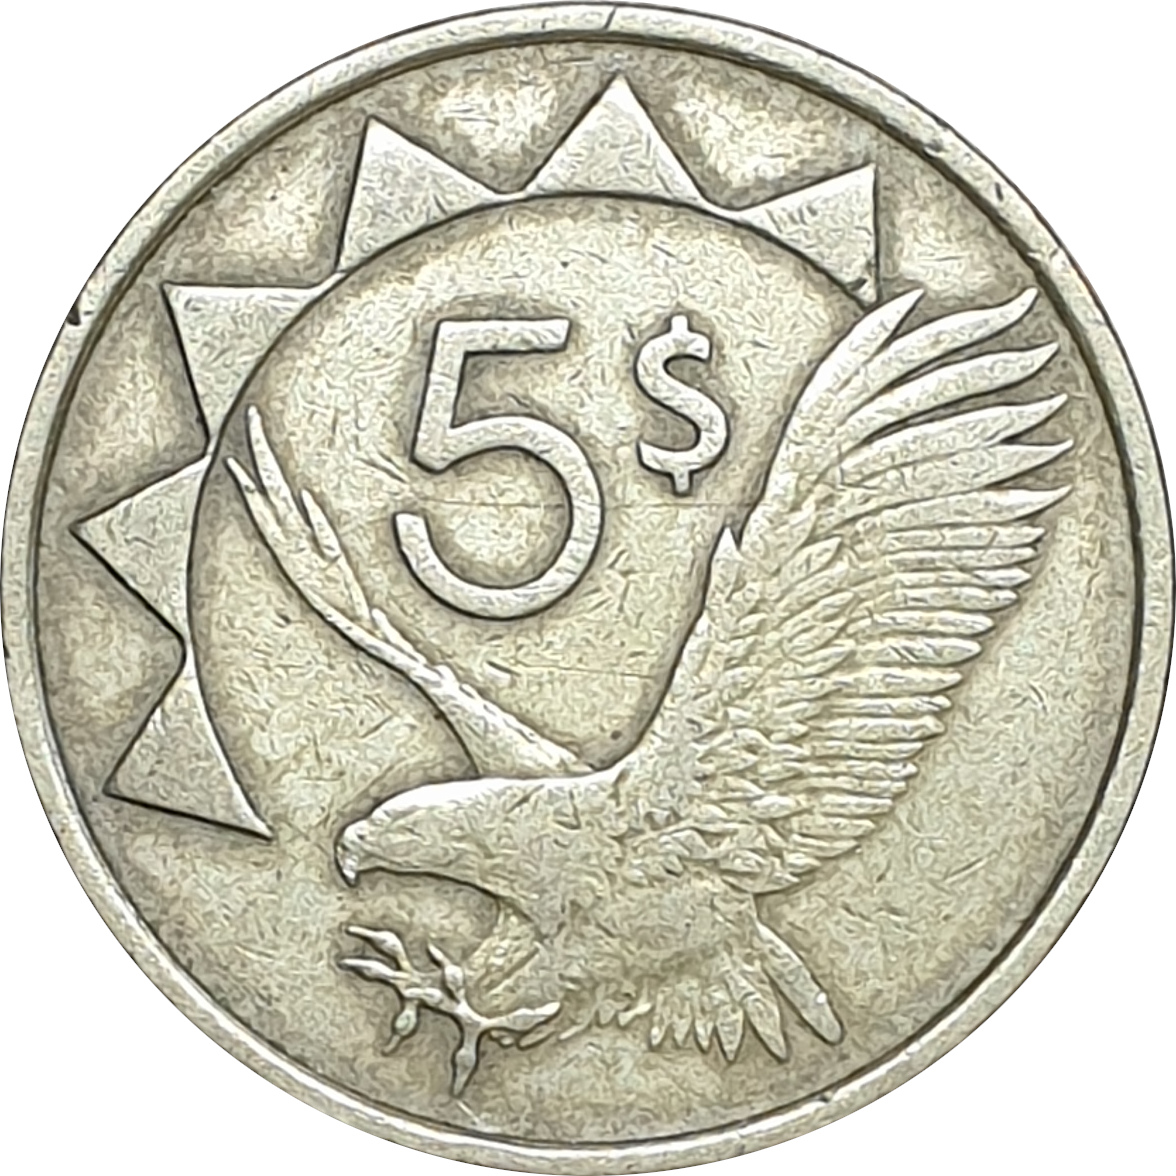 5 dollars - Eagle